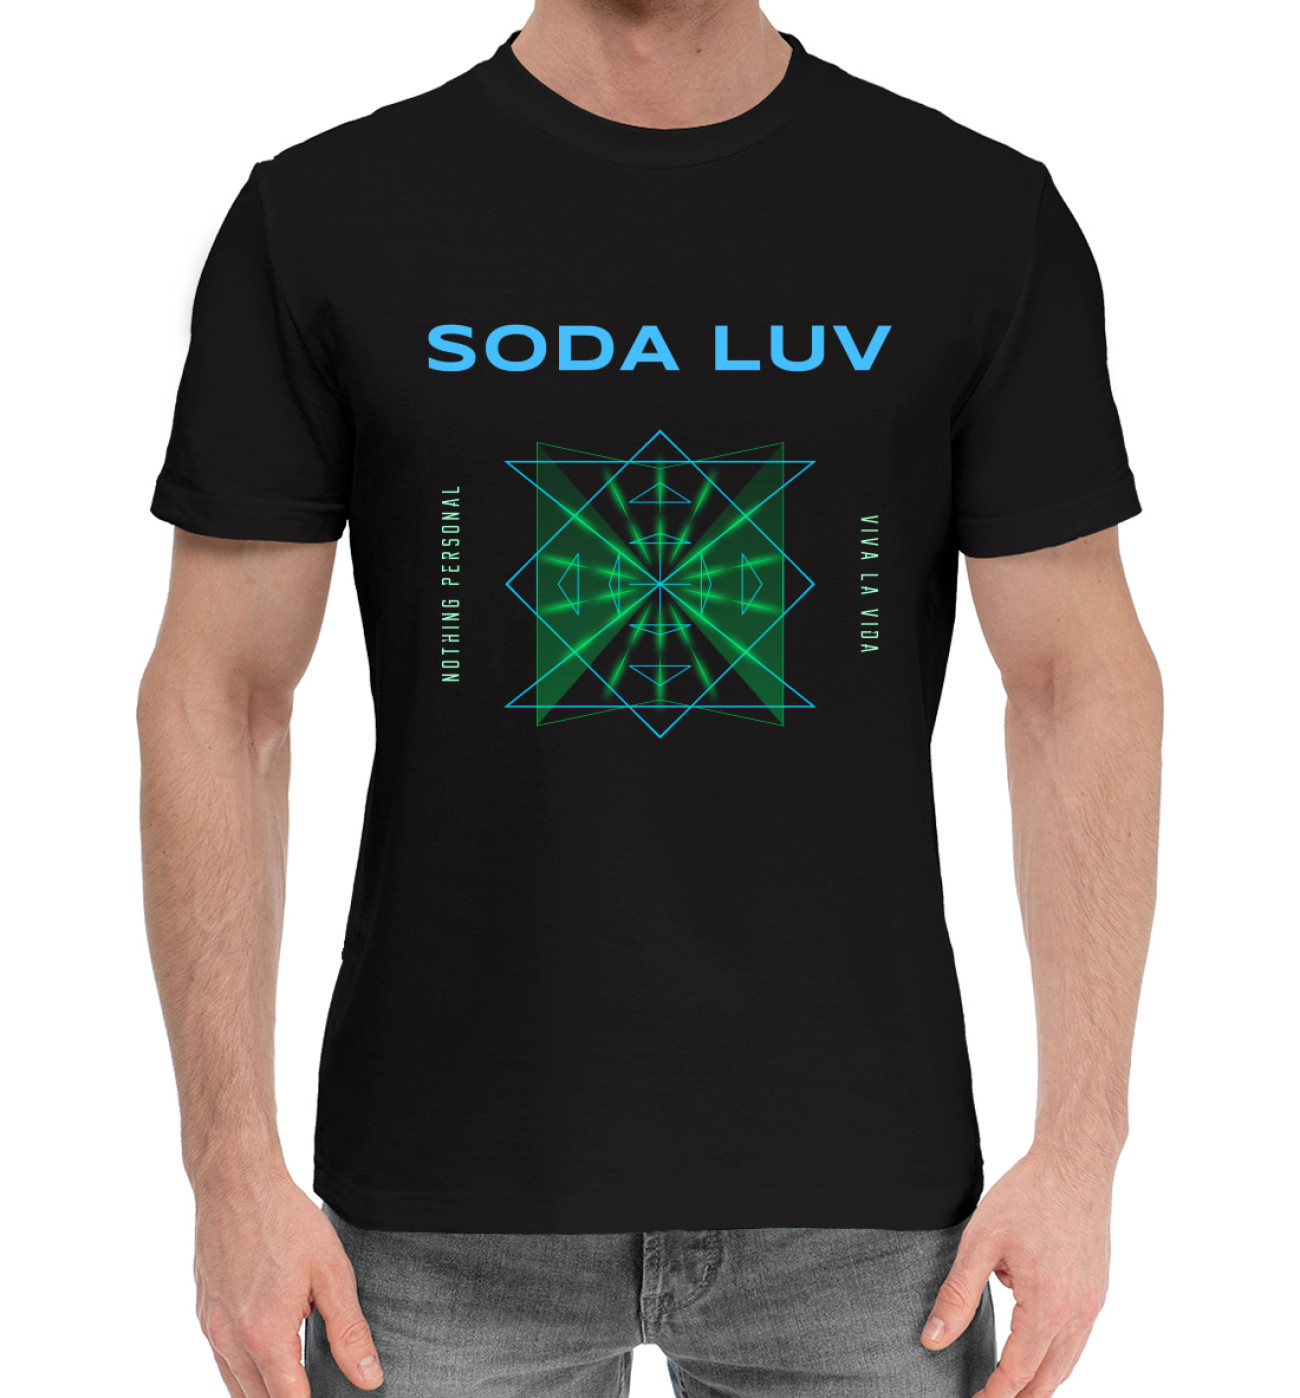 Мужская Хлопковая футболка Soda Luv, артикул: MZK-830511-hfu-2